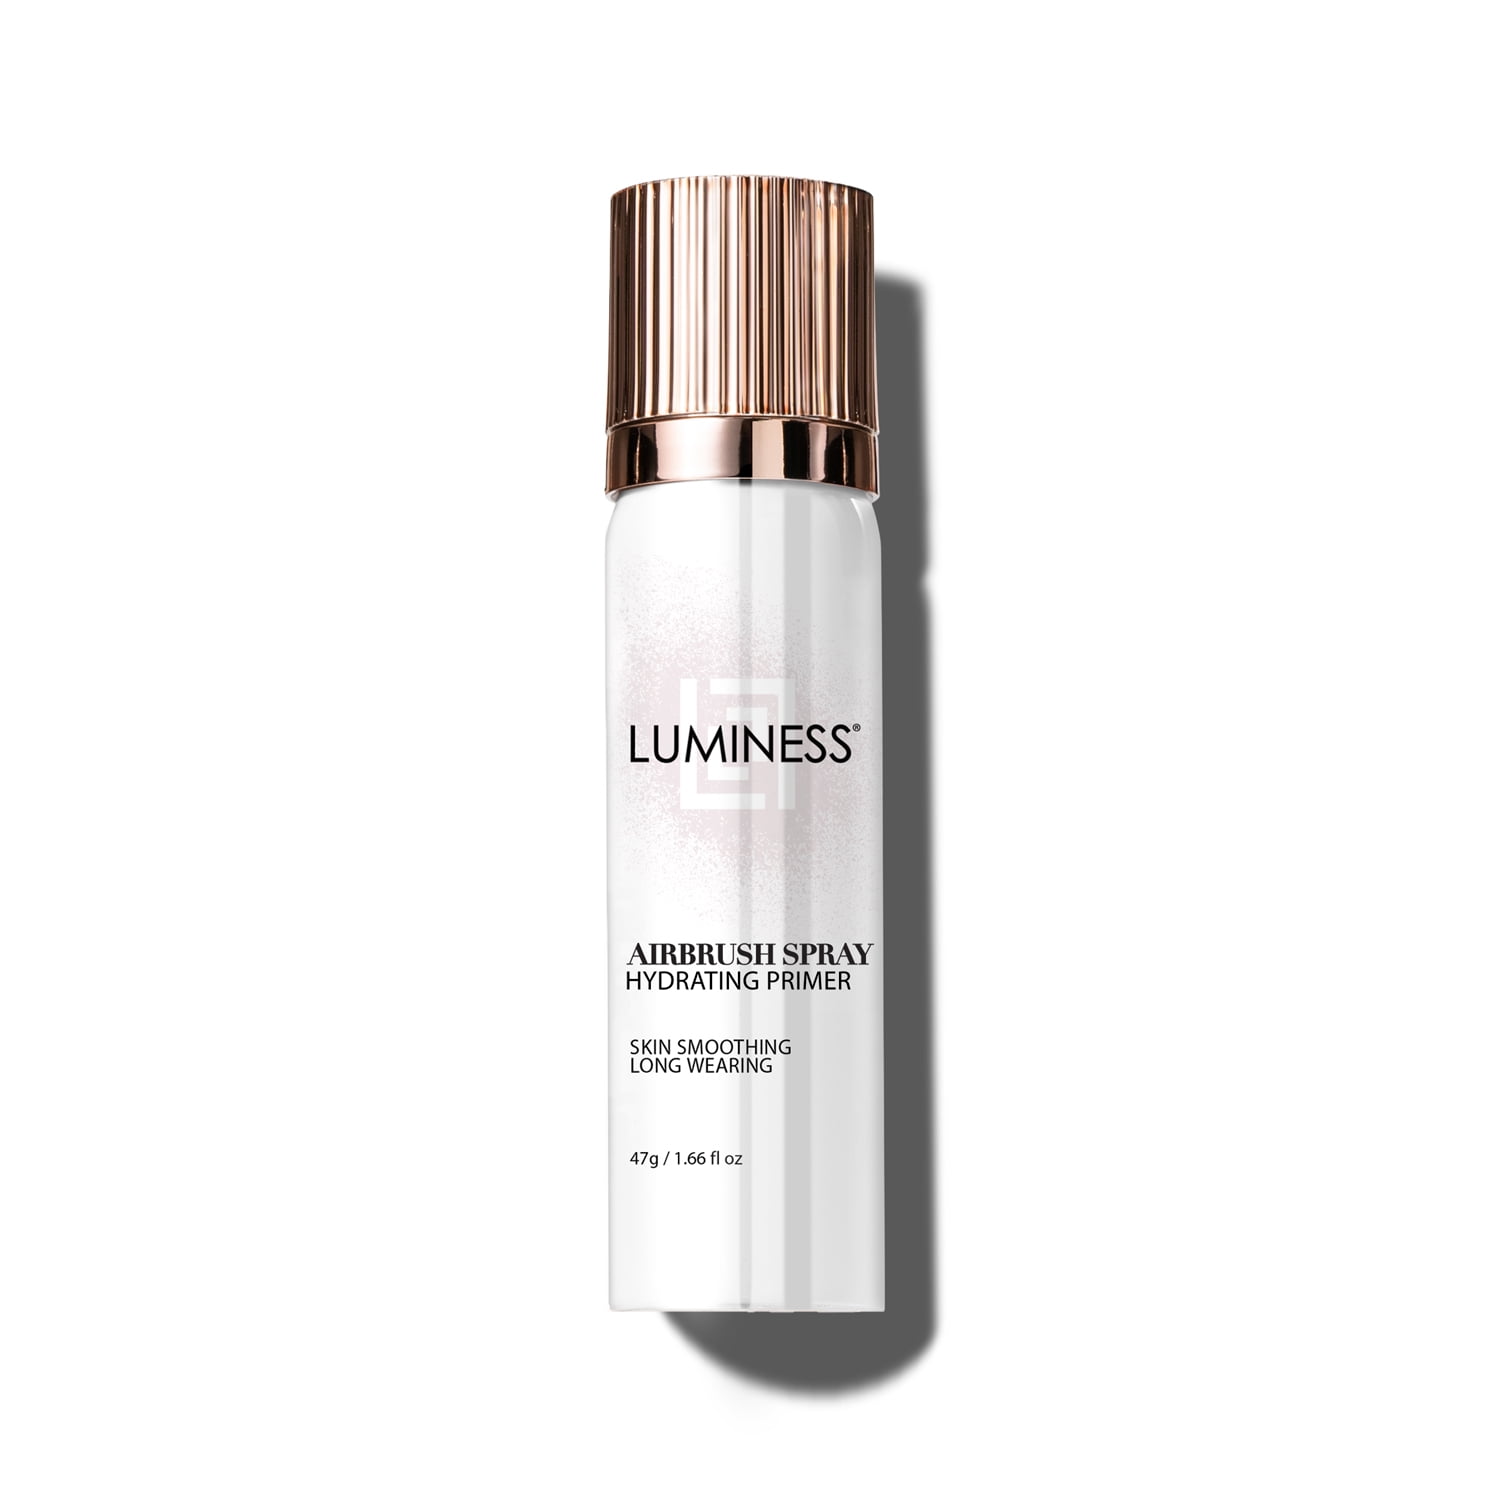 Luminess Airbrush Spray Silk Foundation, Full Coverage Formulated Makeup 2  fl oz 